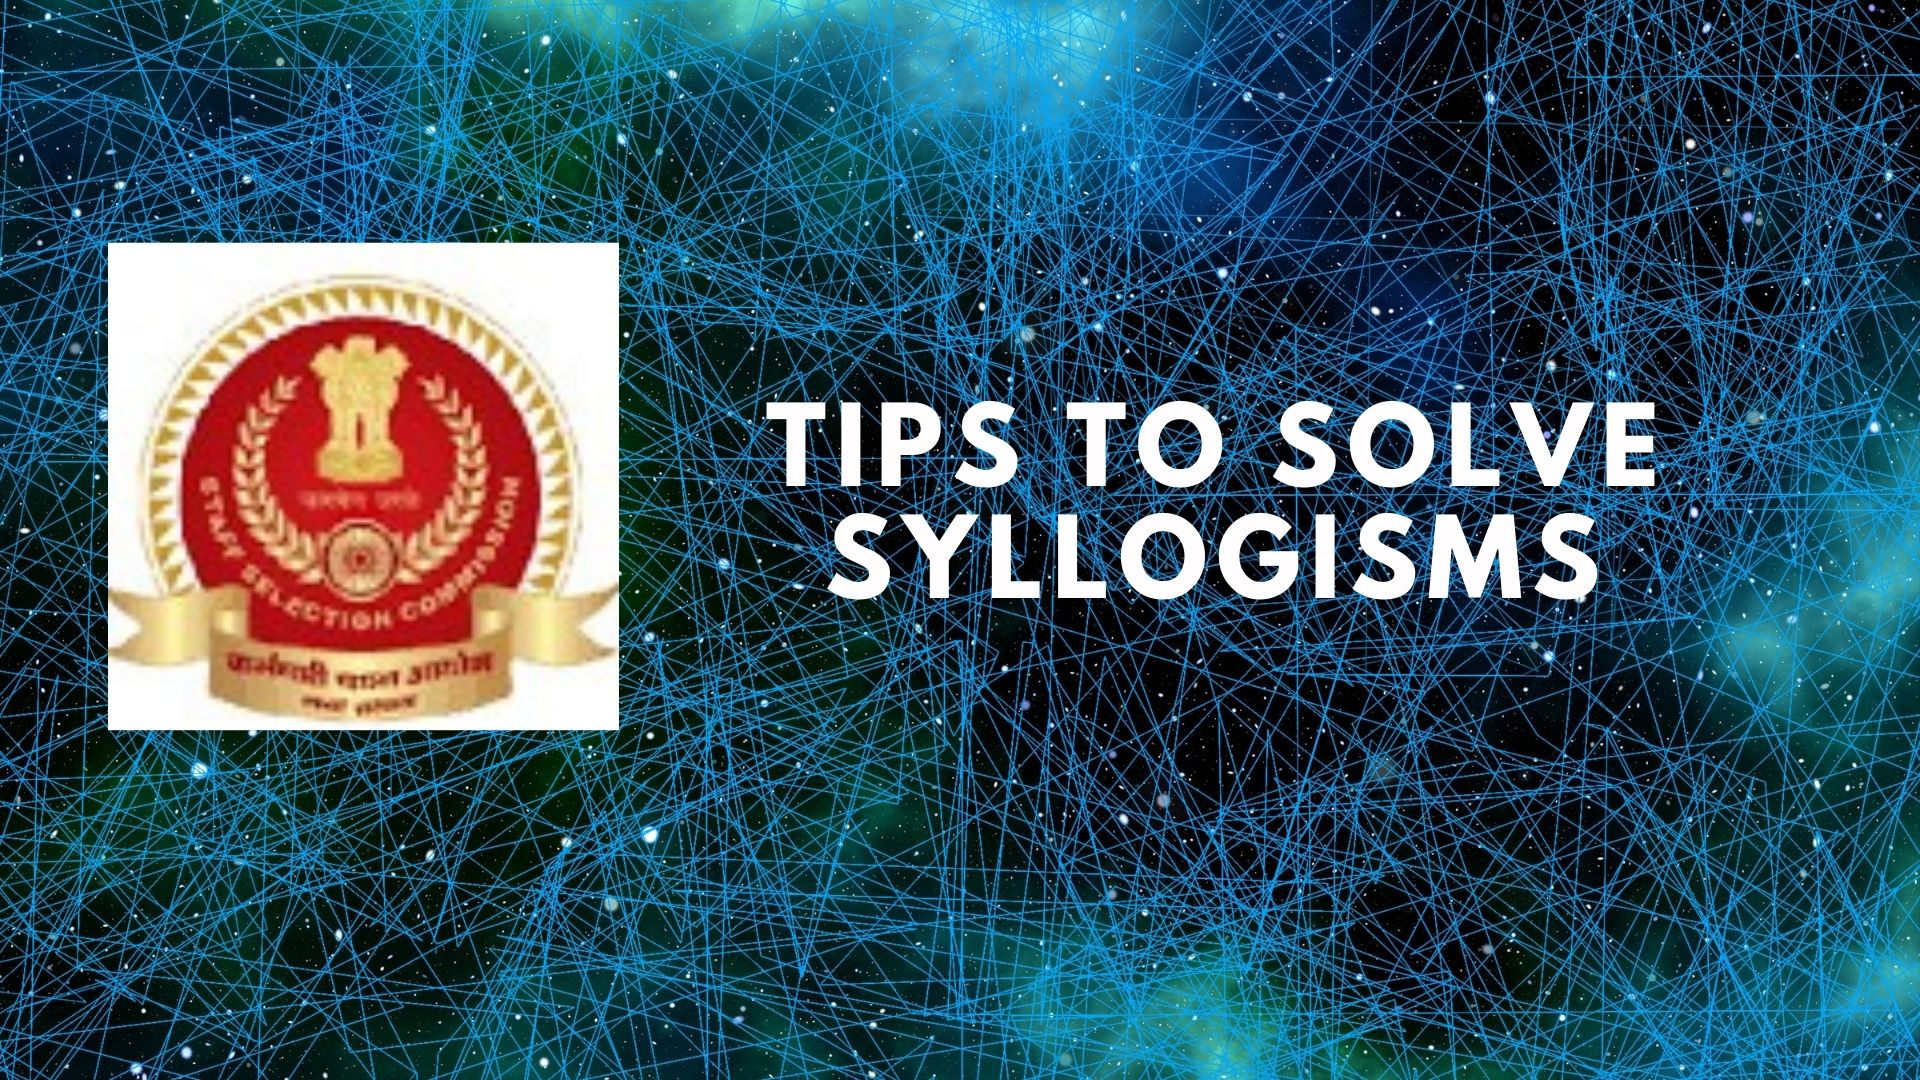 Tips to Solve Syllogisms